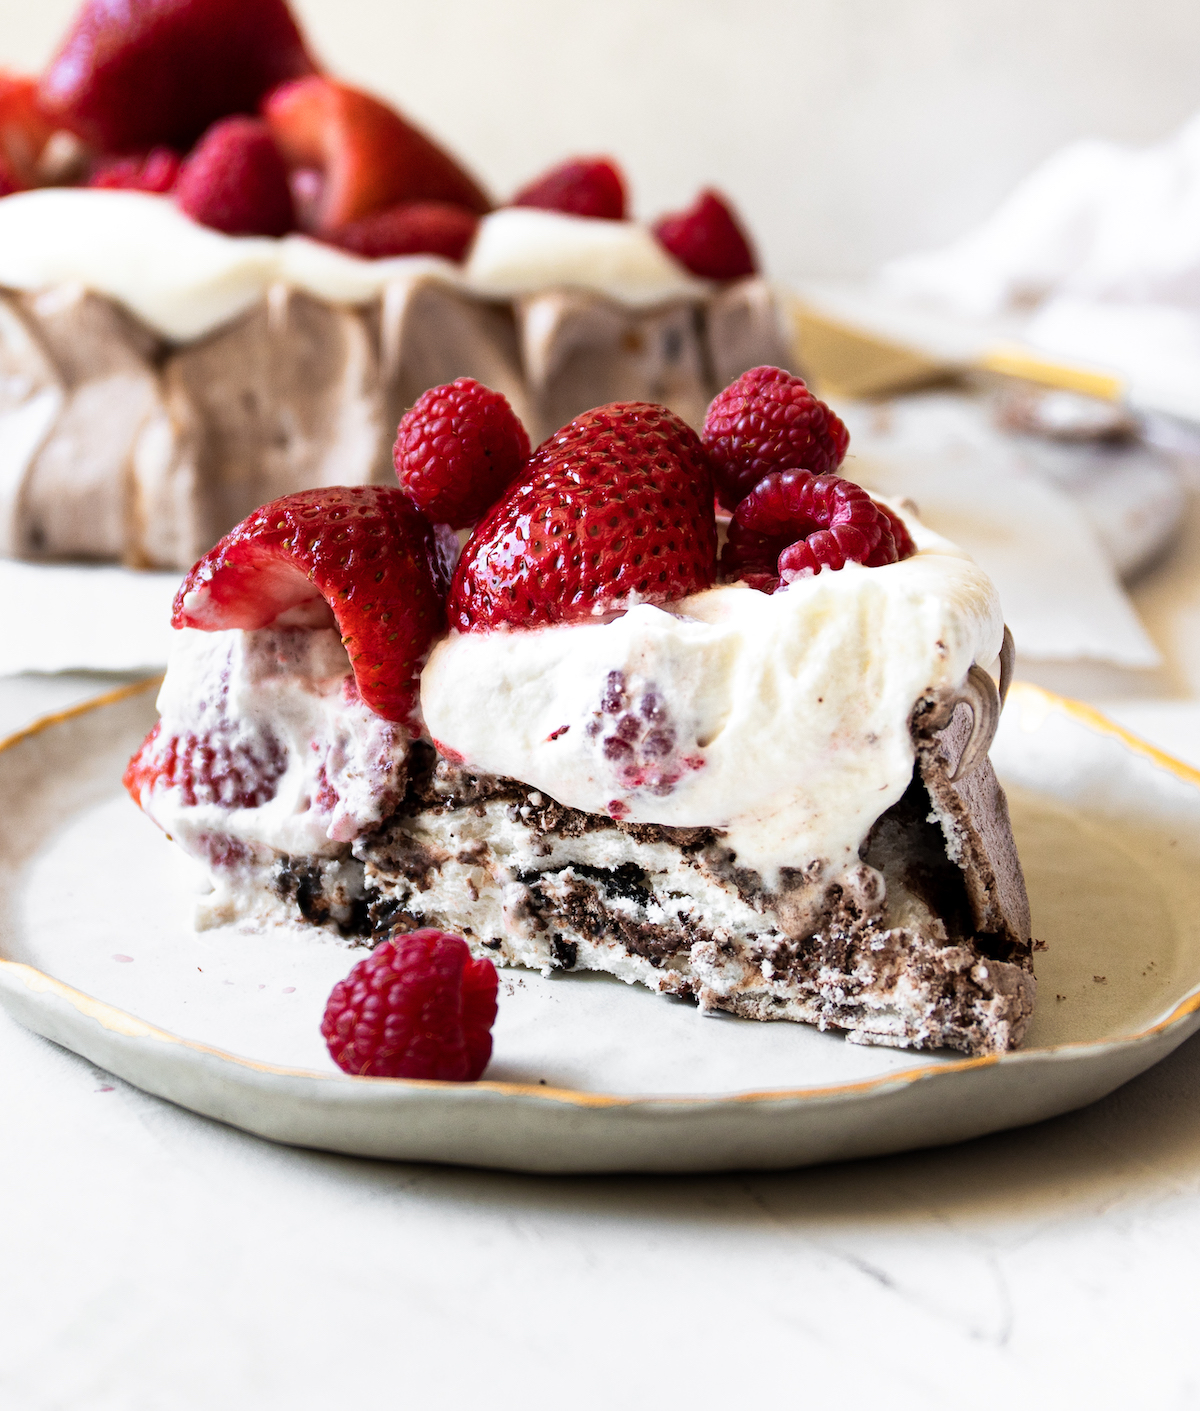 Chocolate pavlova with berries and whipped cream.